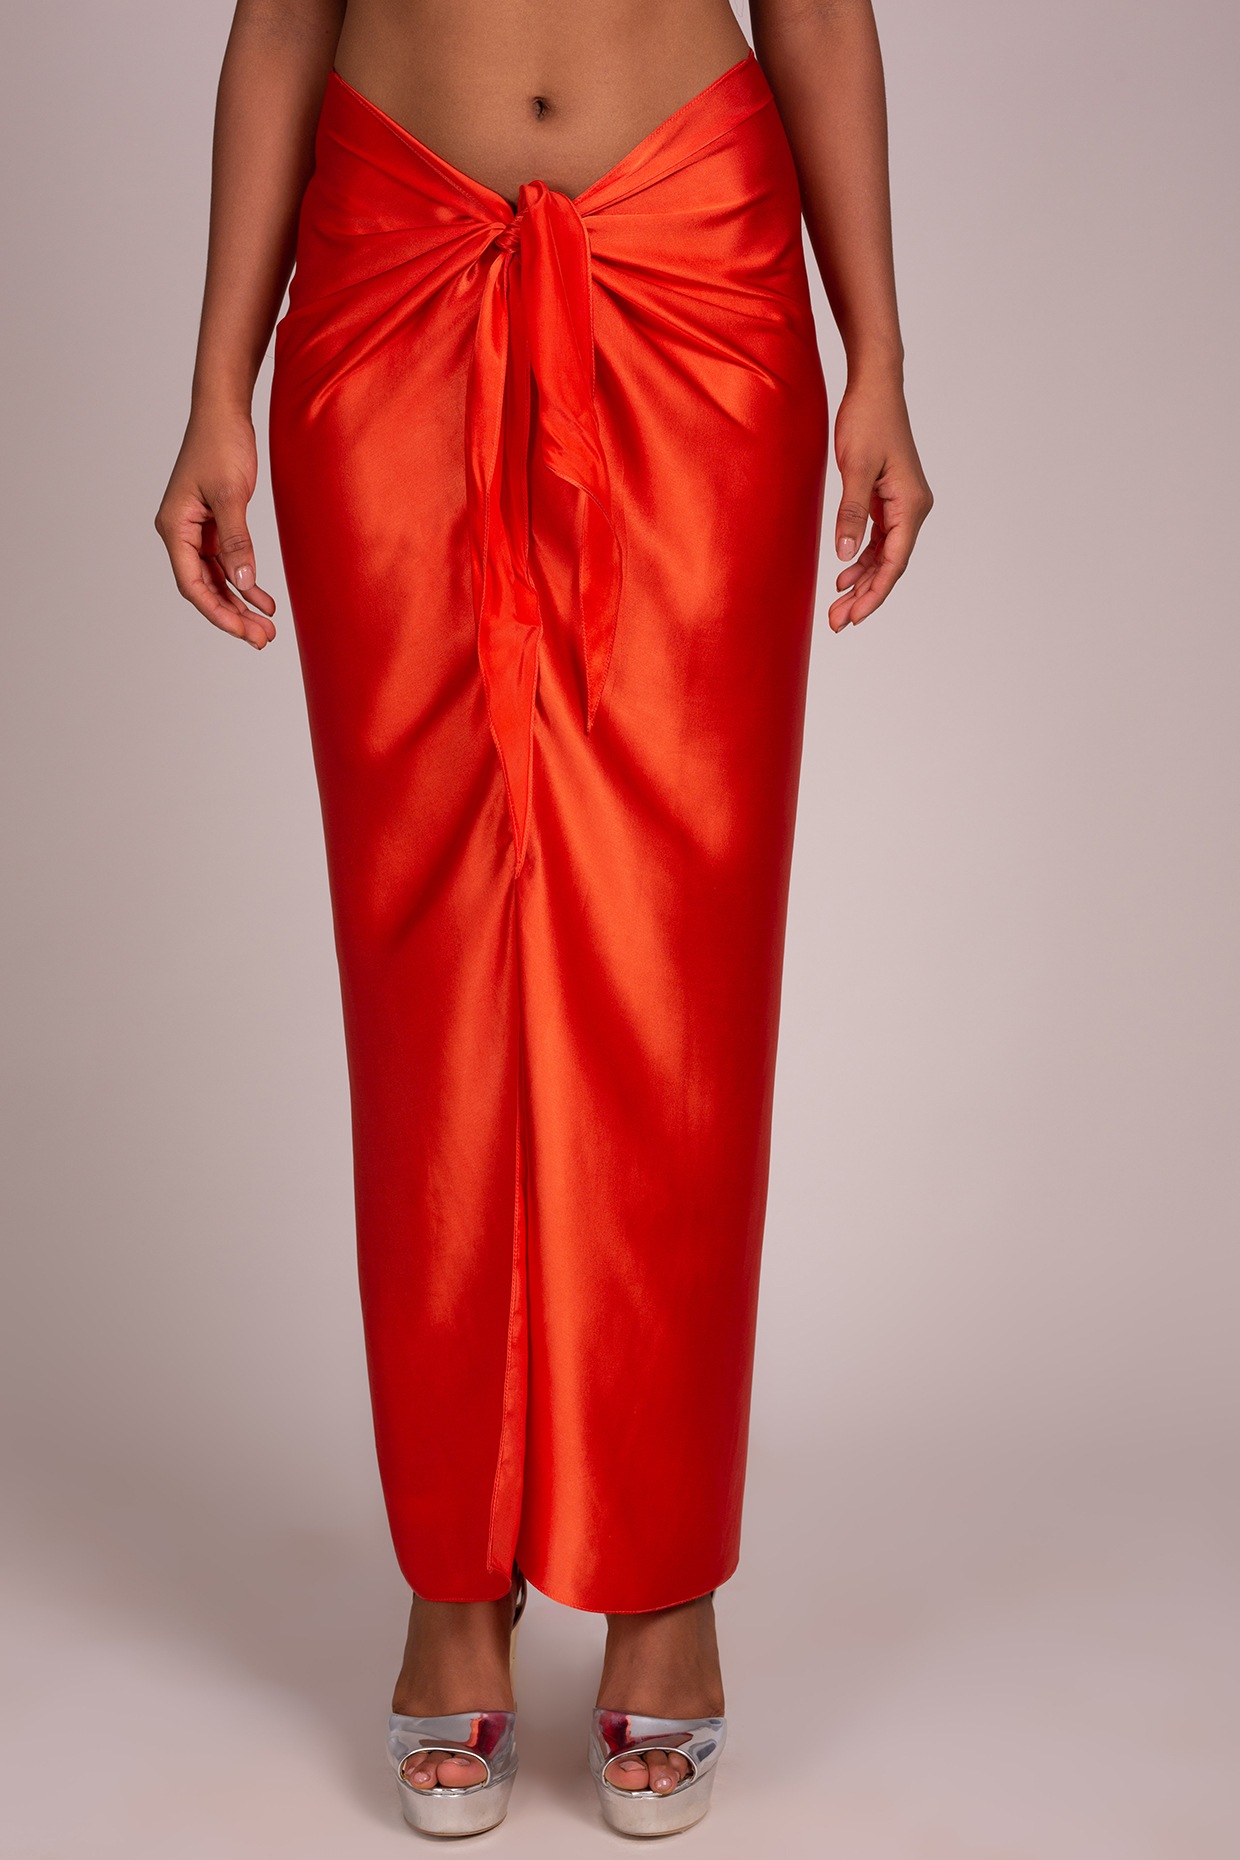 Orange Layered Sarong Skirt Design by ...